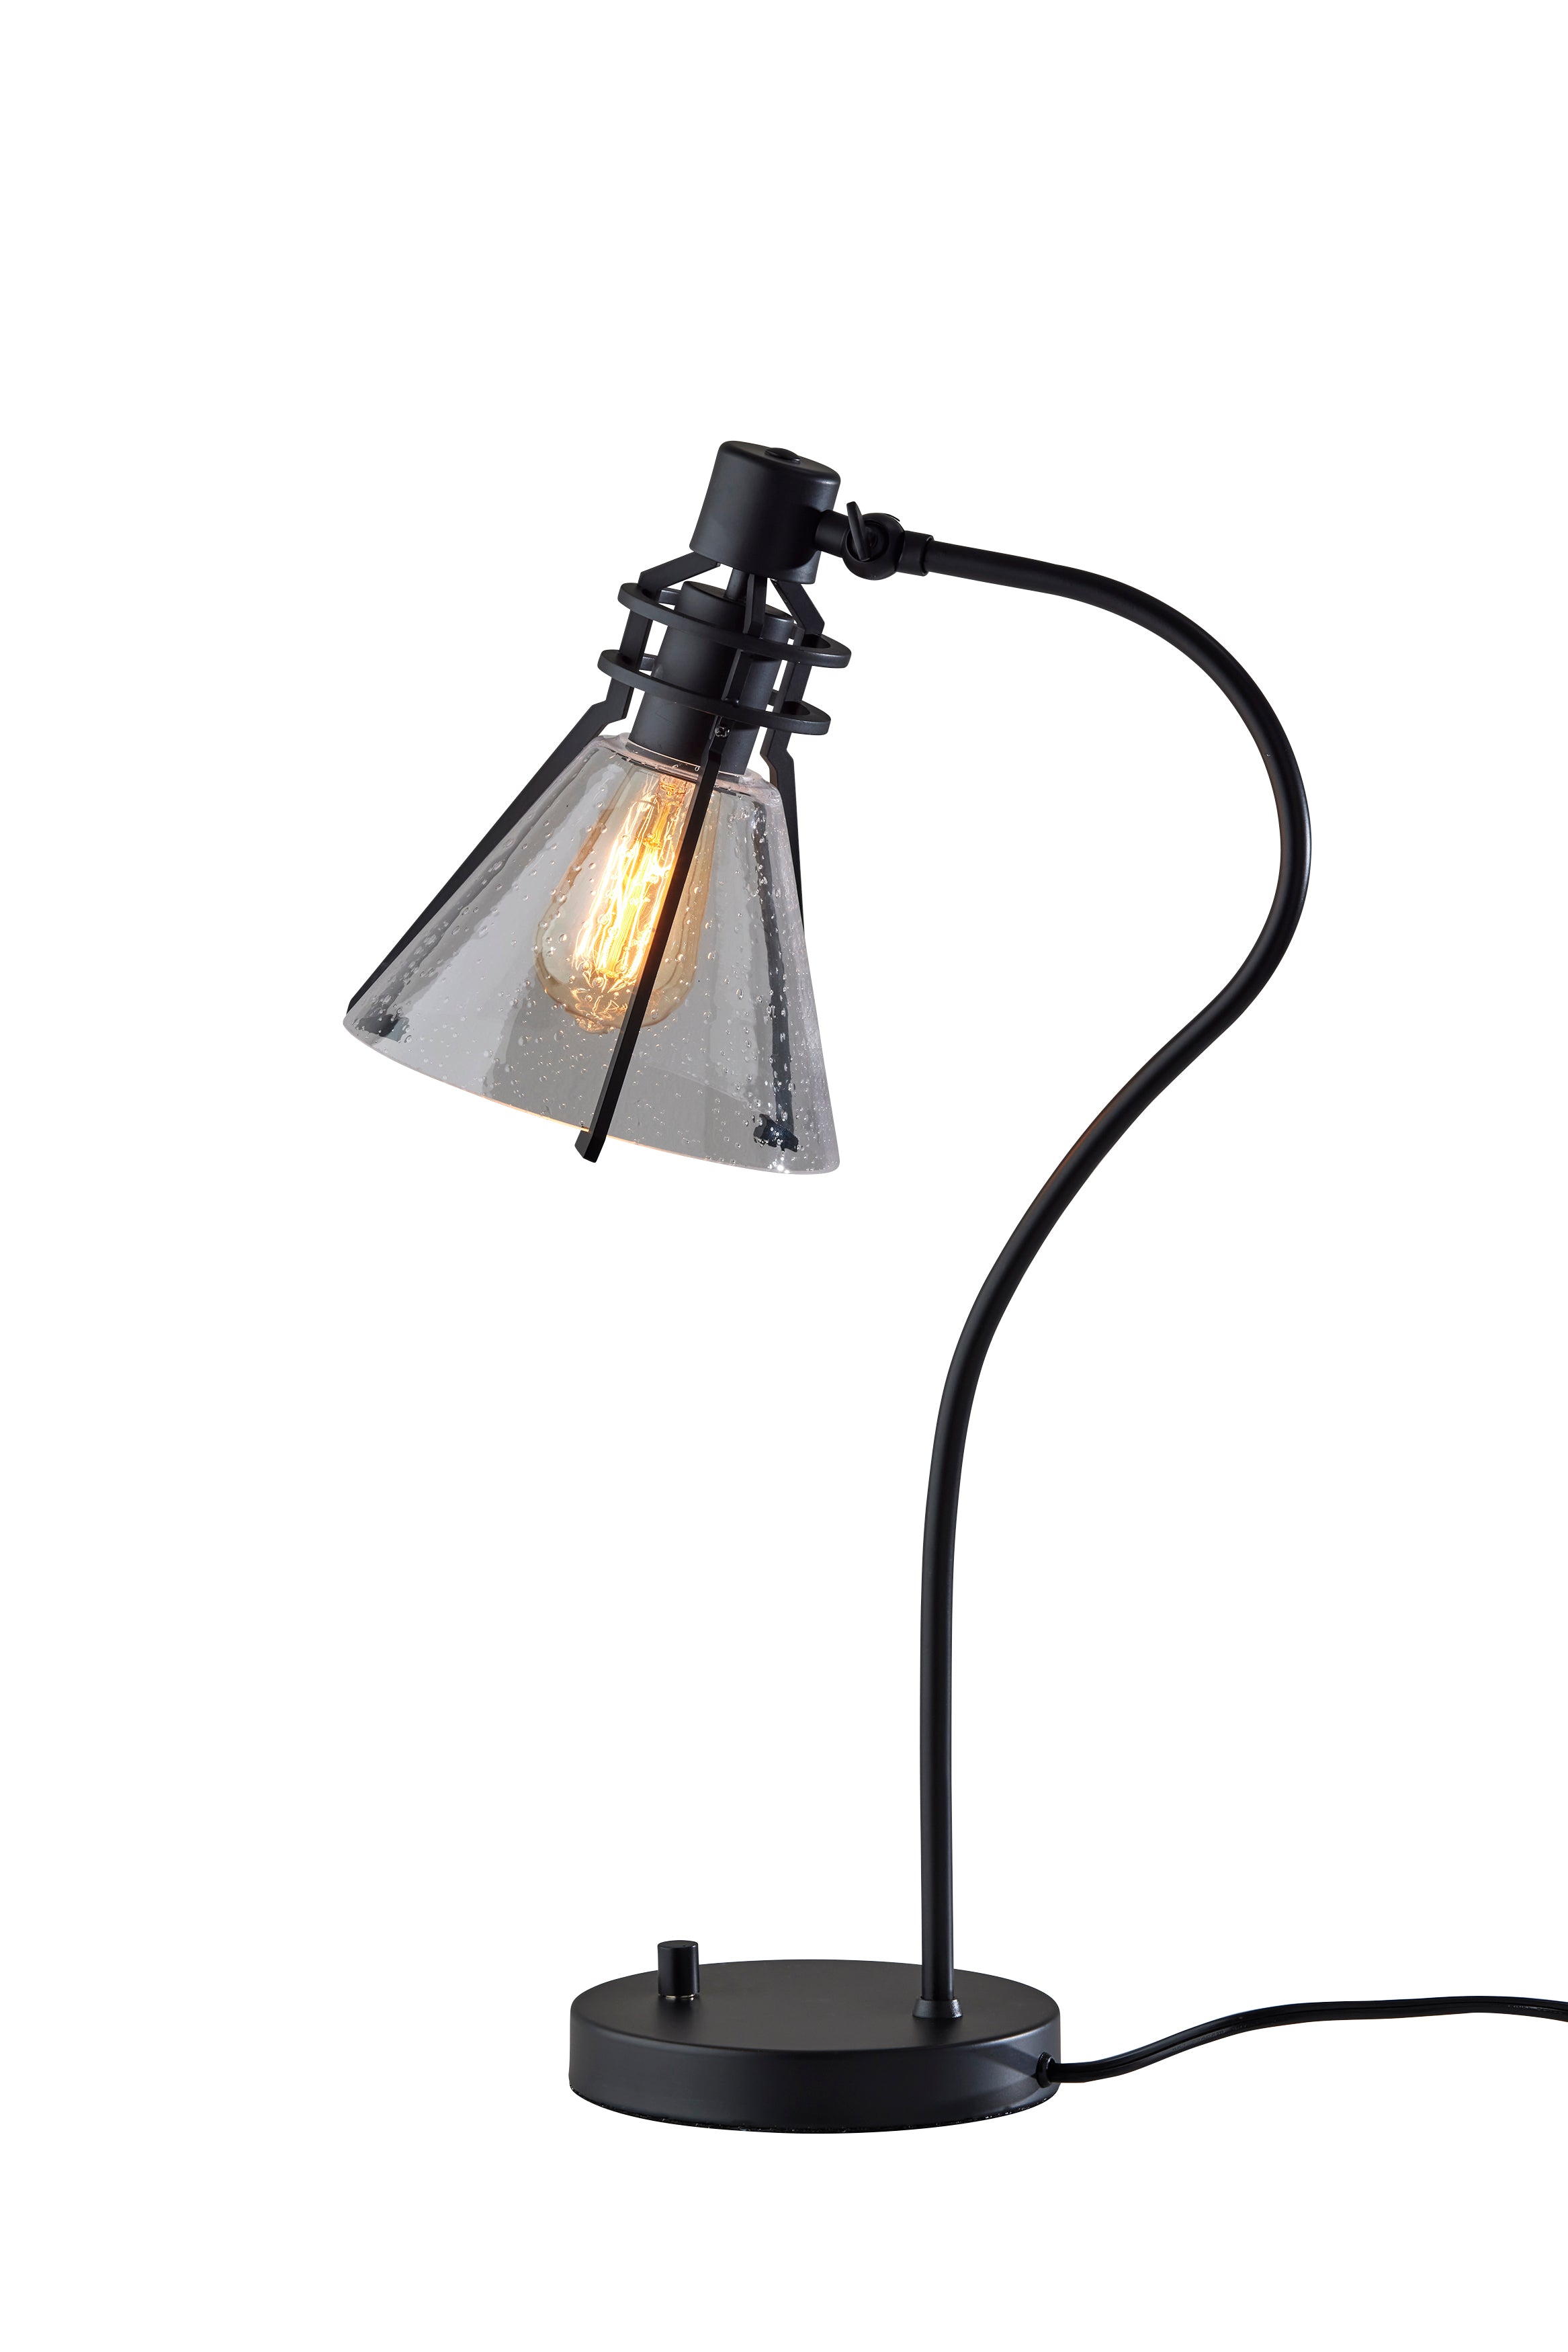 BECKETT Lampe sur table Noir - 2128-01 | ADESSO